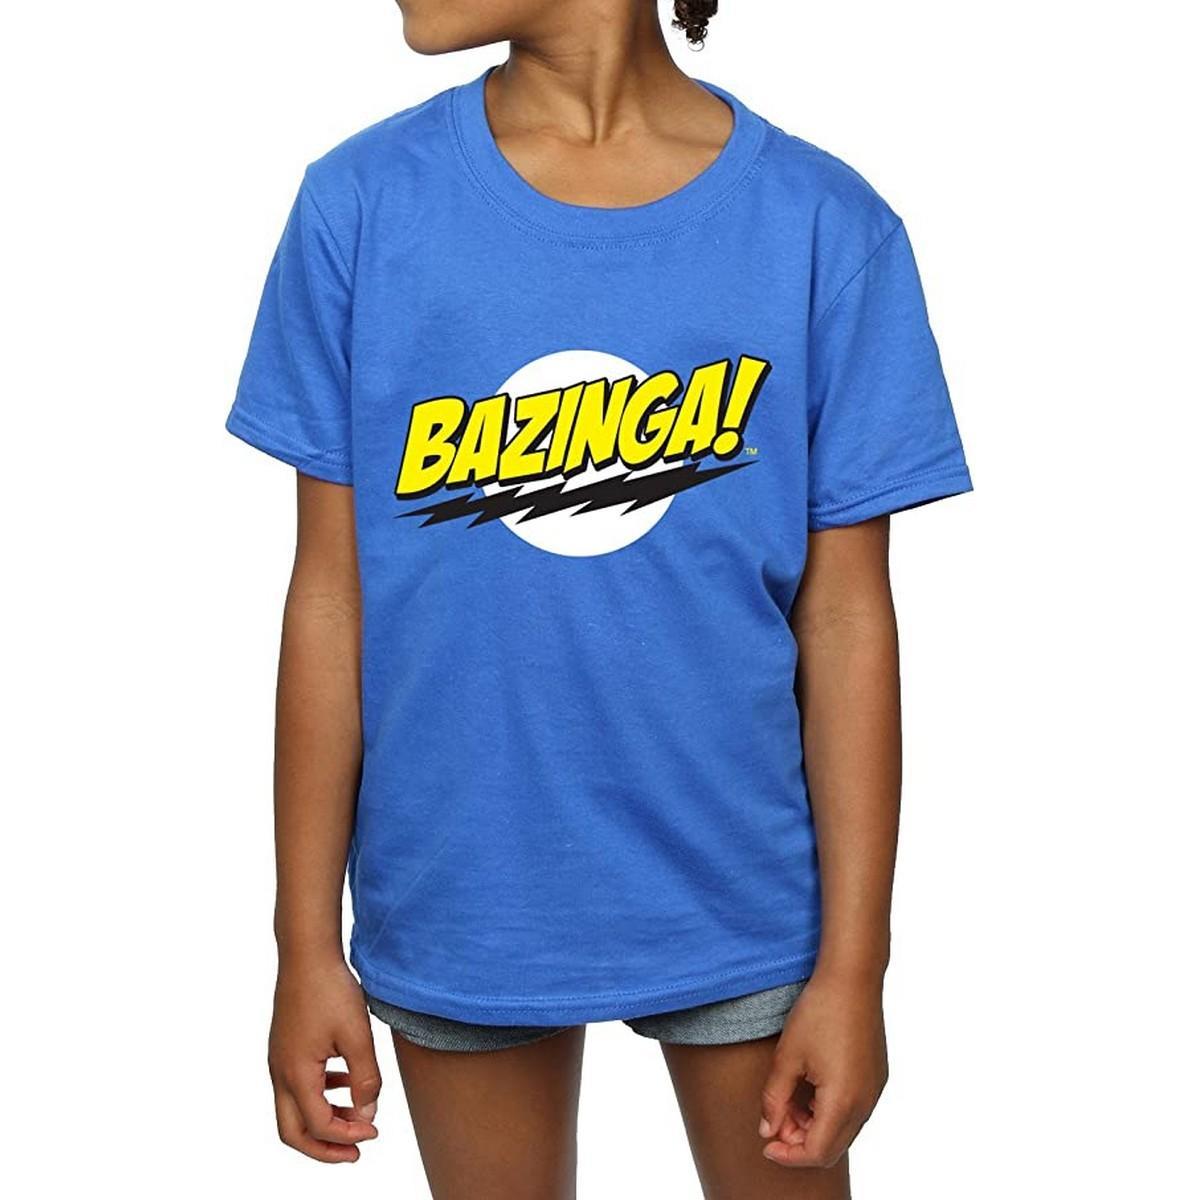 The Big Bang Theory Girls Bazinga Cotton T-Shirt (Royal Blue) (12-13 Years)